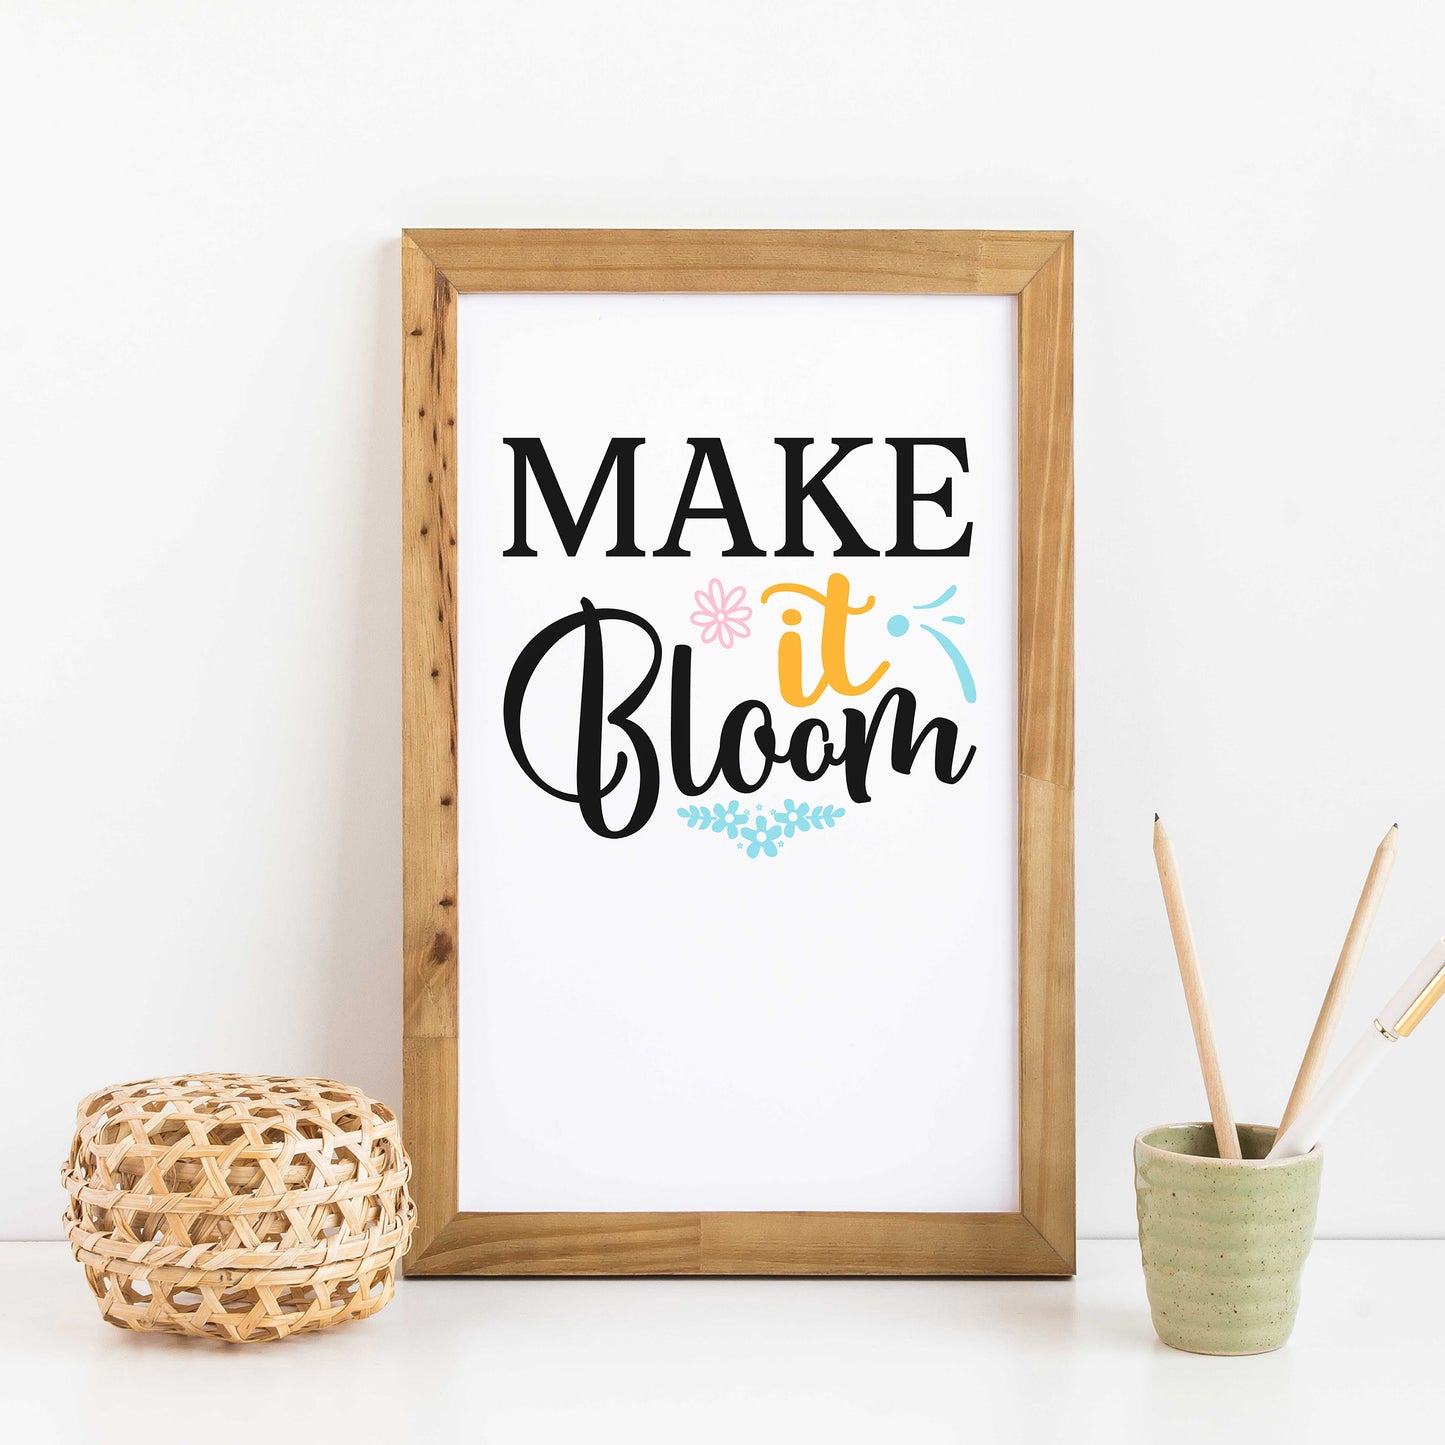 "Make It Bloom" Graphic